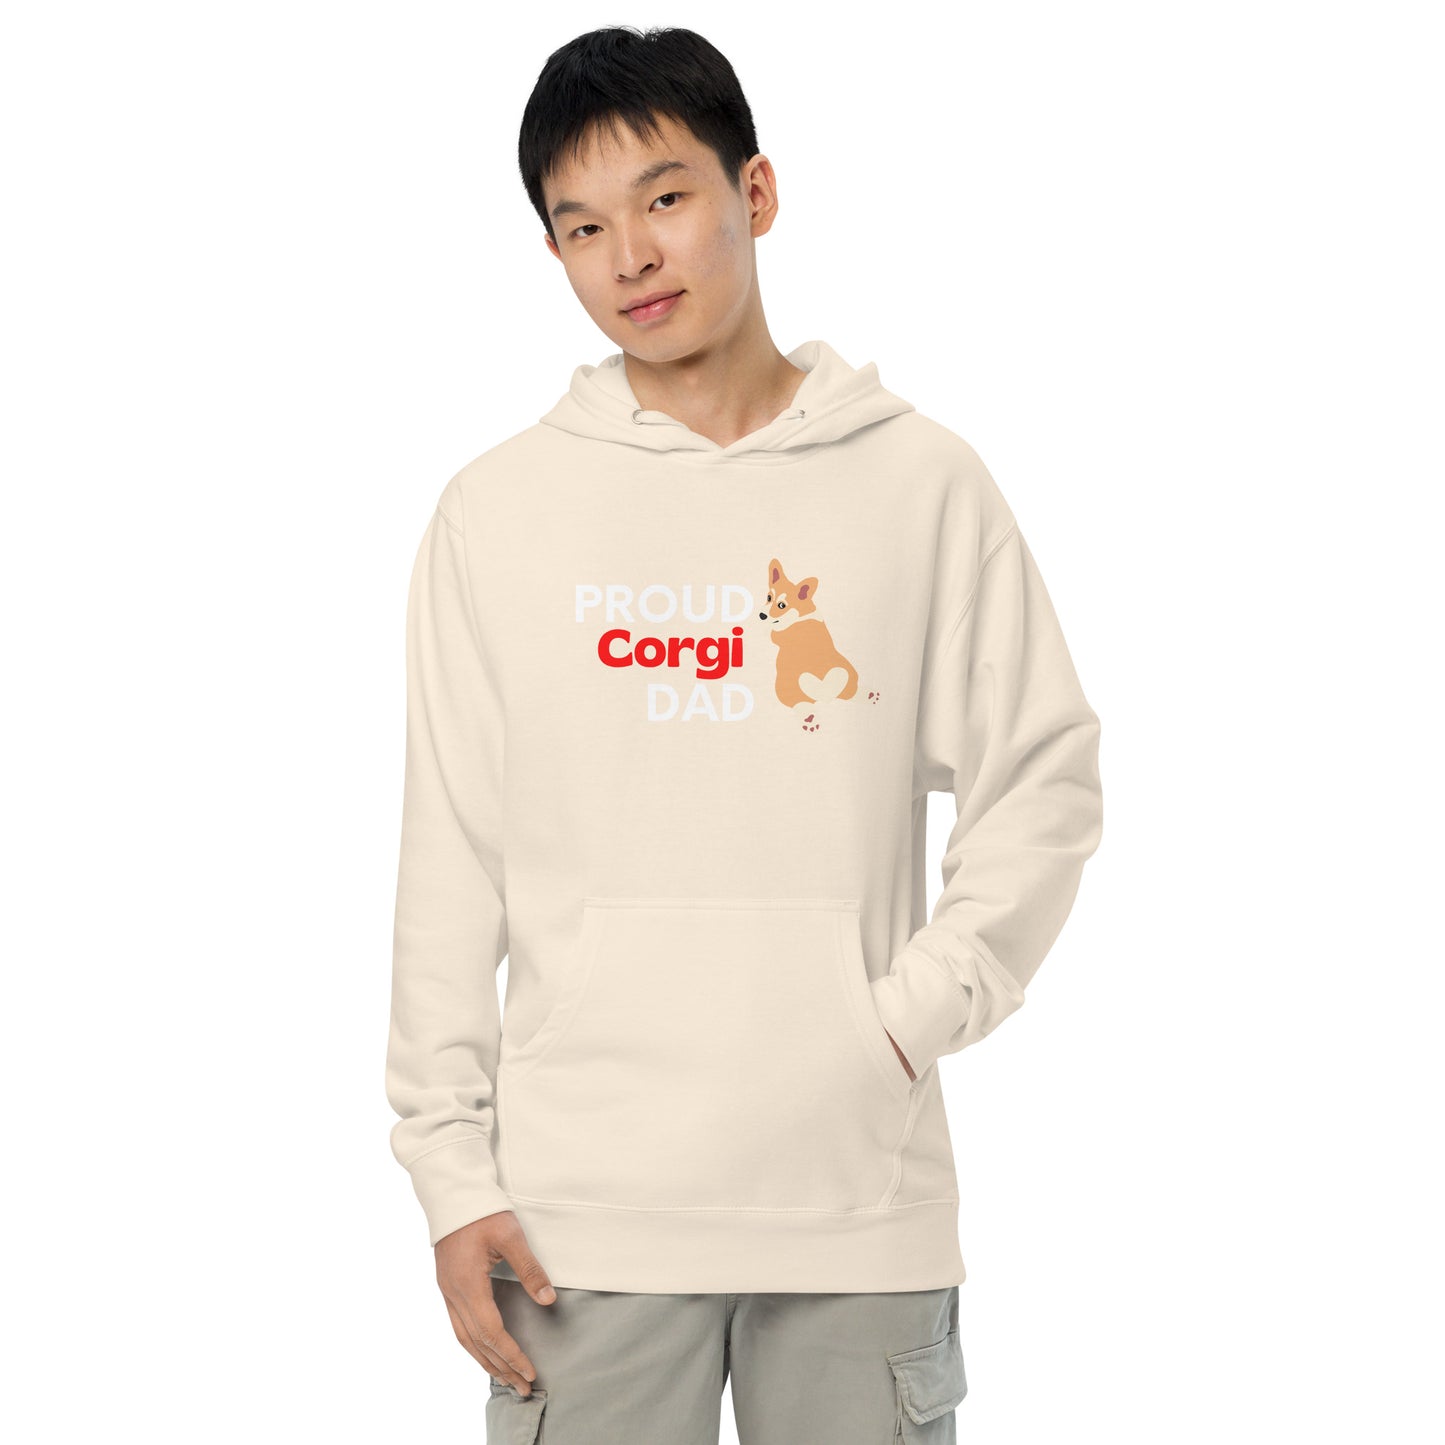 Men's hoodie 'PROUD Corgi DAD'